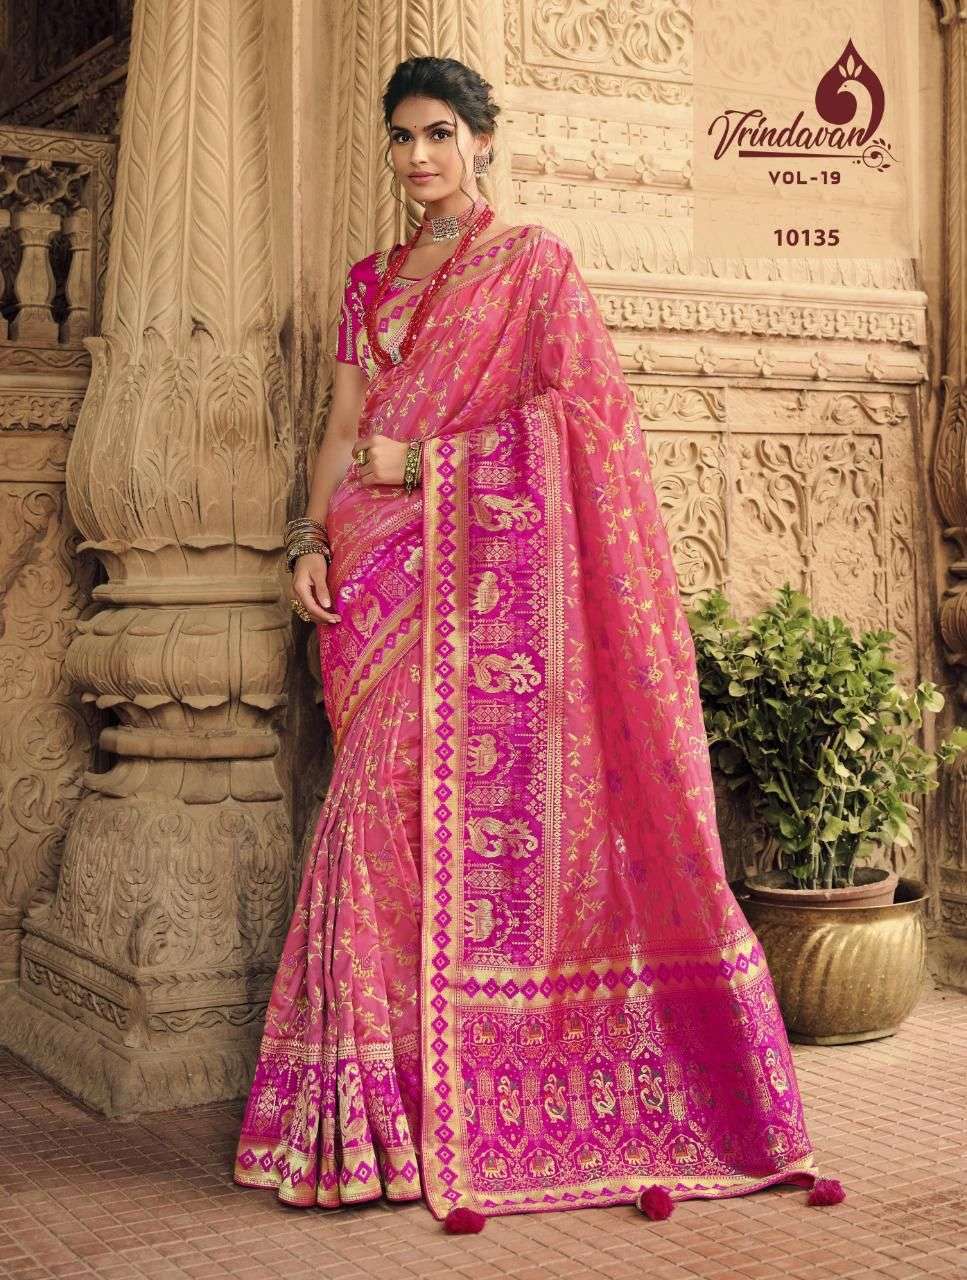 royal designer vrindavan vol 19 party wear banarasi silk saree collection deale 1 2022 01 10 21 31 23